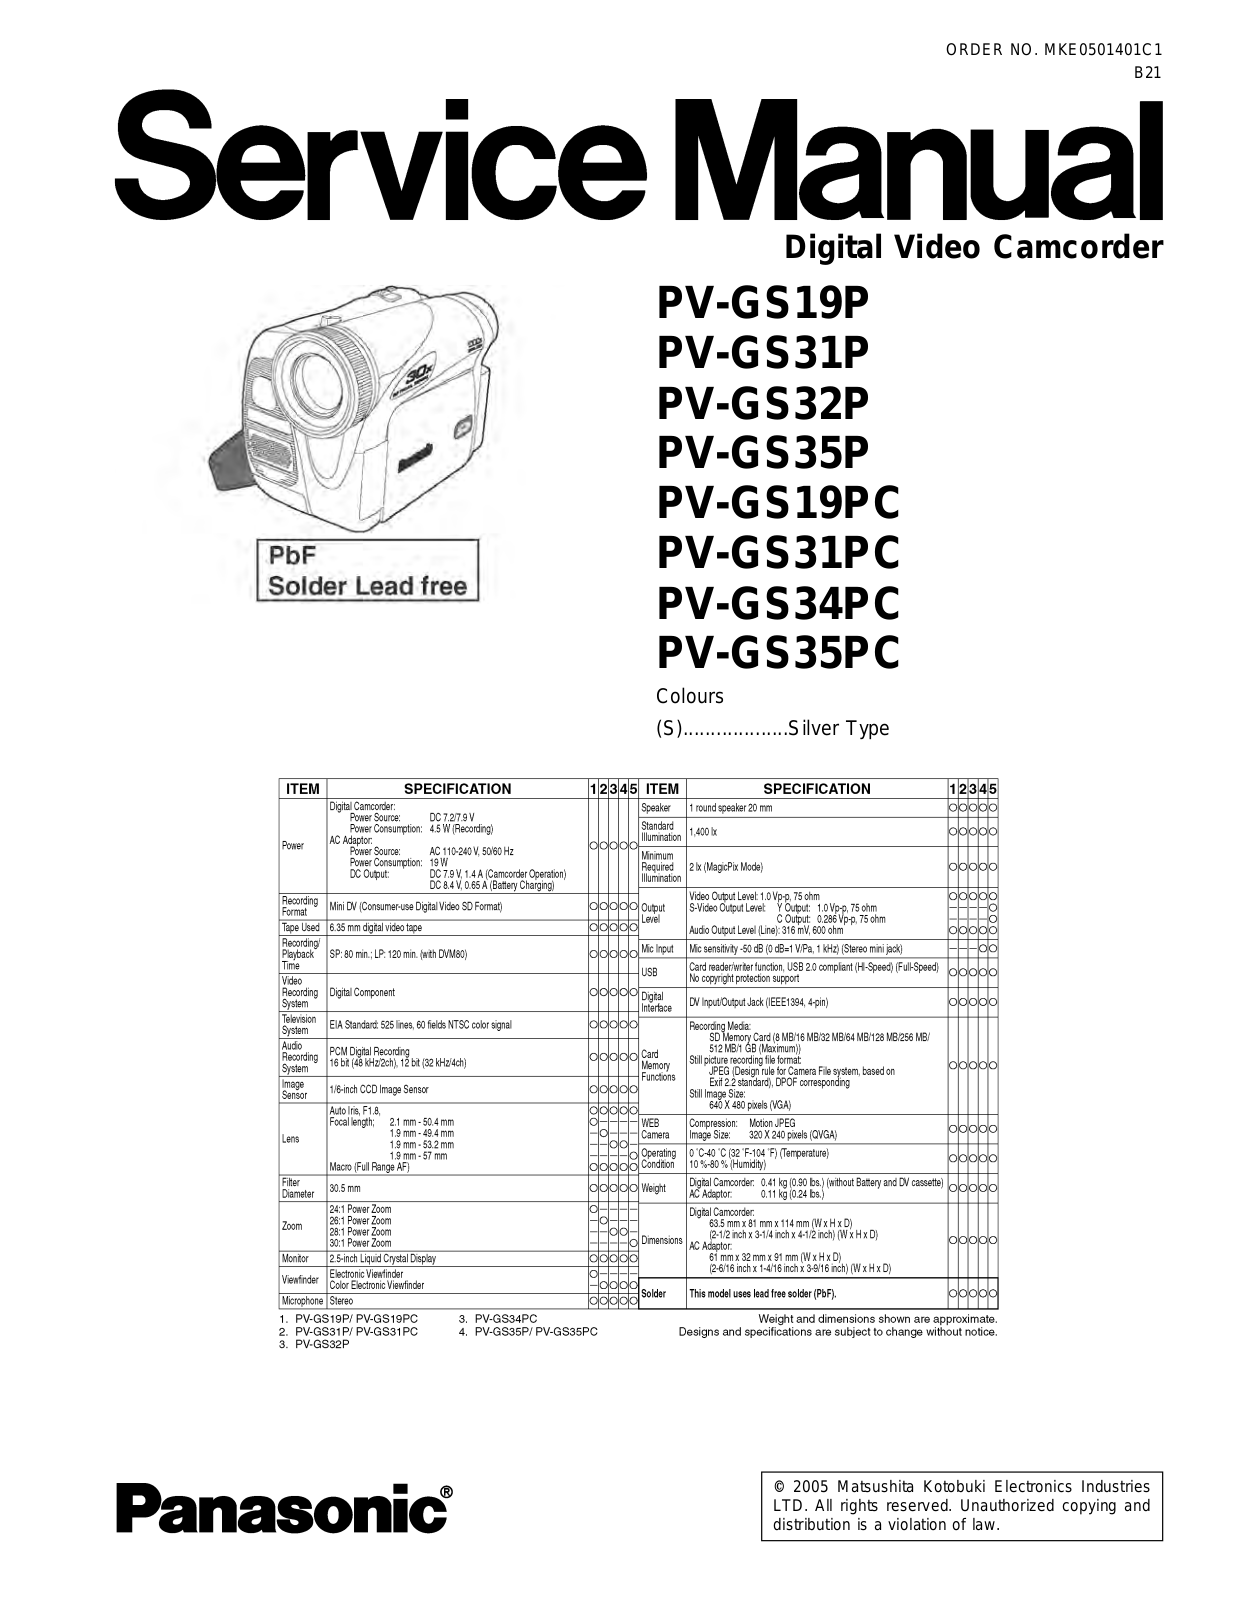 Panasonic PV-GS31P, PV-GS32P, PV-GS19P, PV-GS19PC, PV-GS35P Service Manual